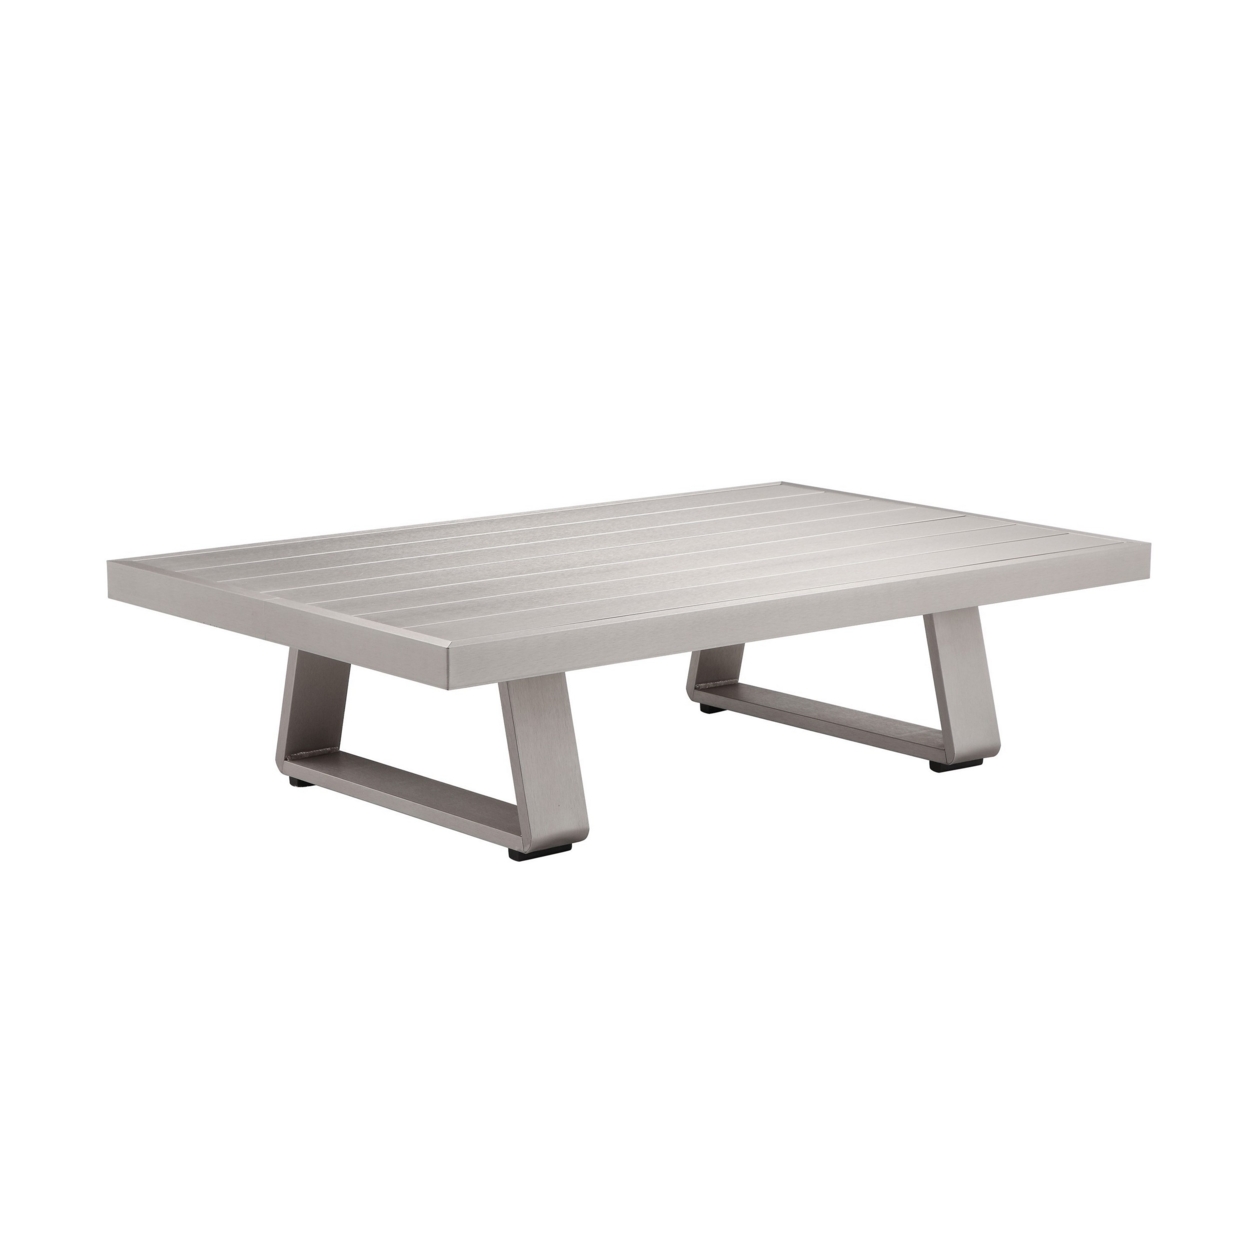 Xia 48 Inch Outdoor Coffee Table, Gray Aluminum Frame, Plank Style Tabletop- Saltoro Sherpi